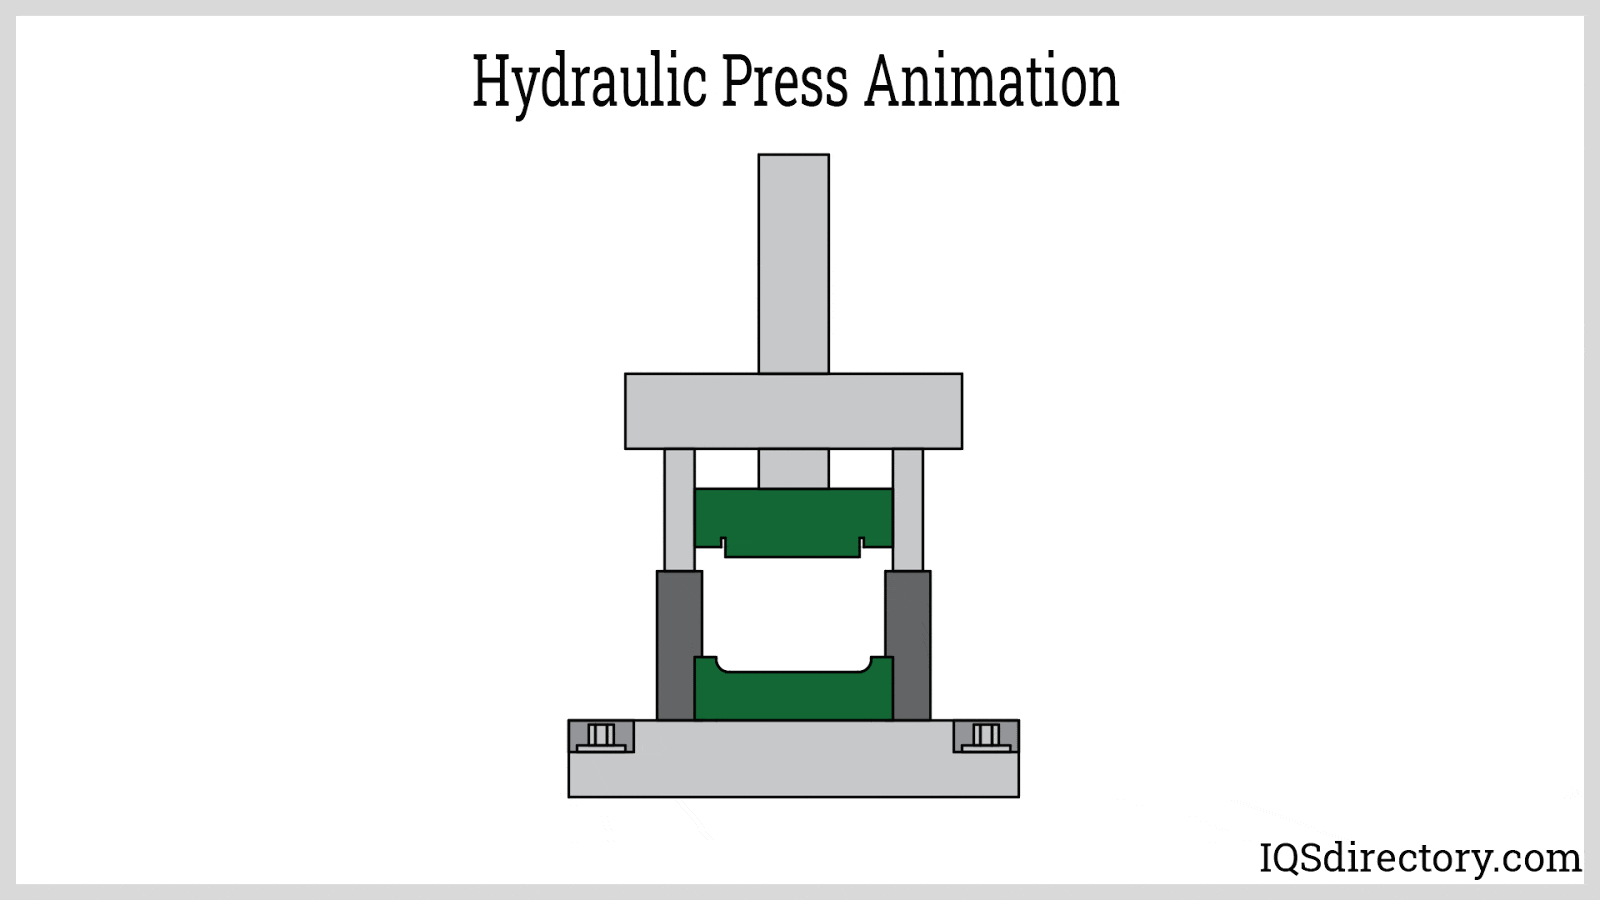 How aHydraulic Press Works